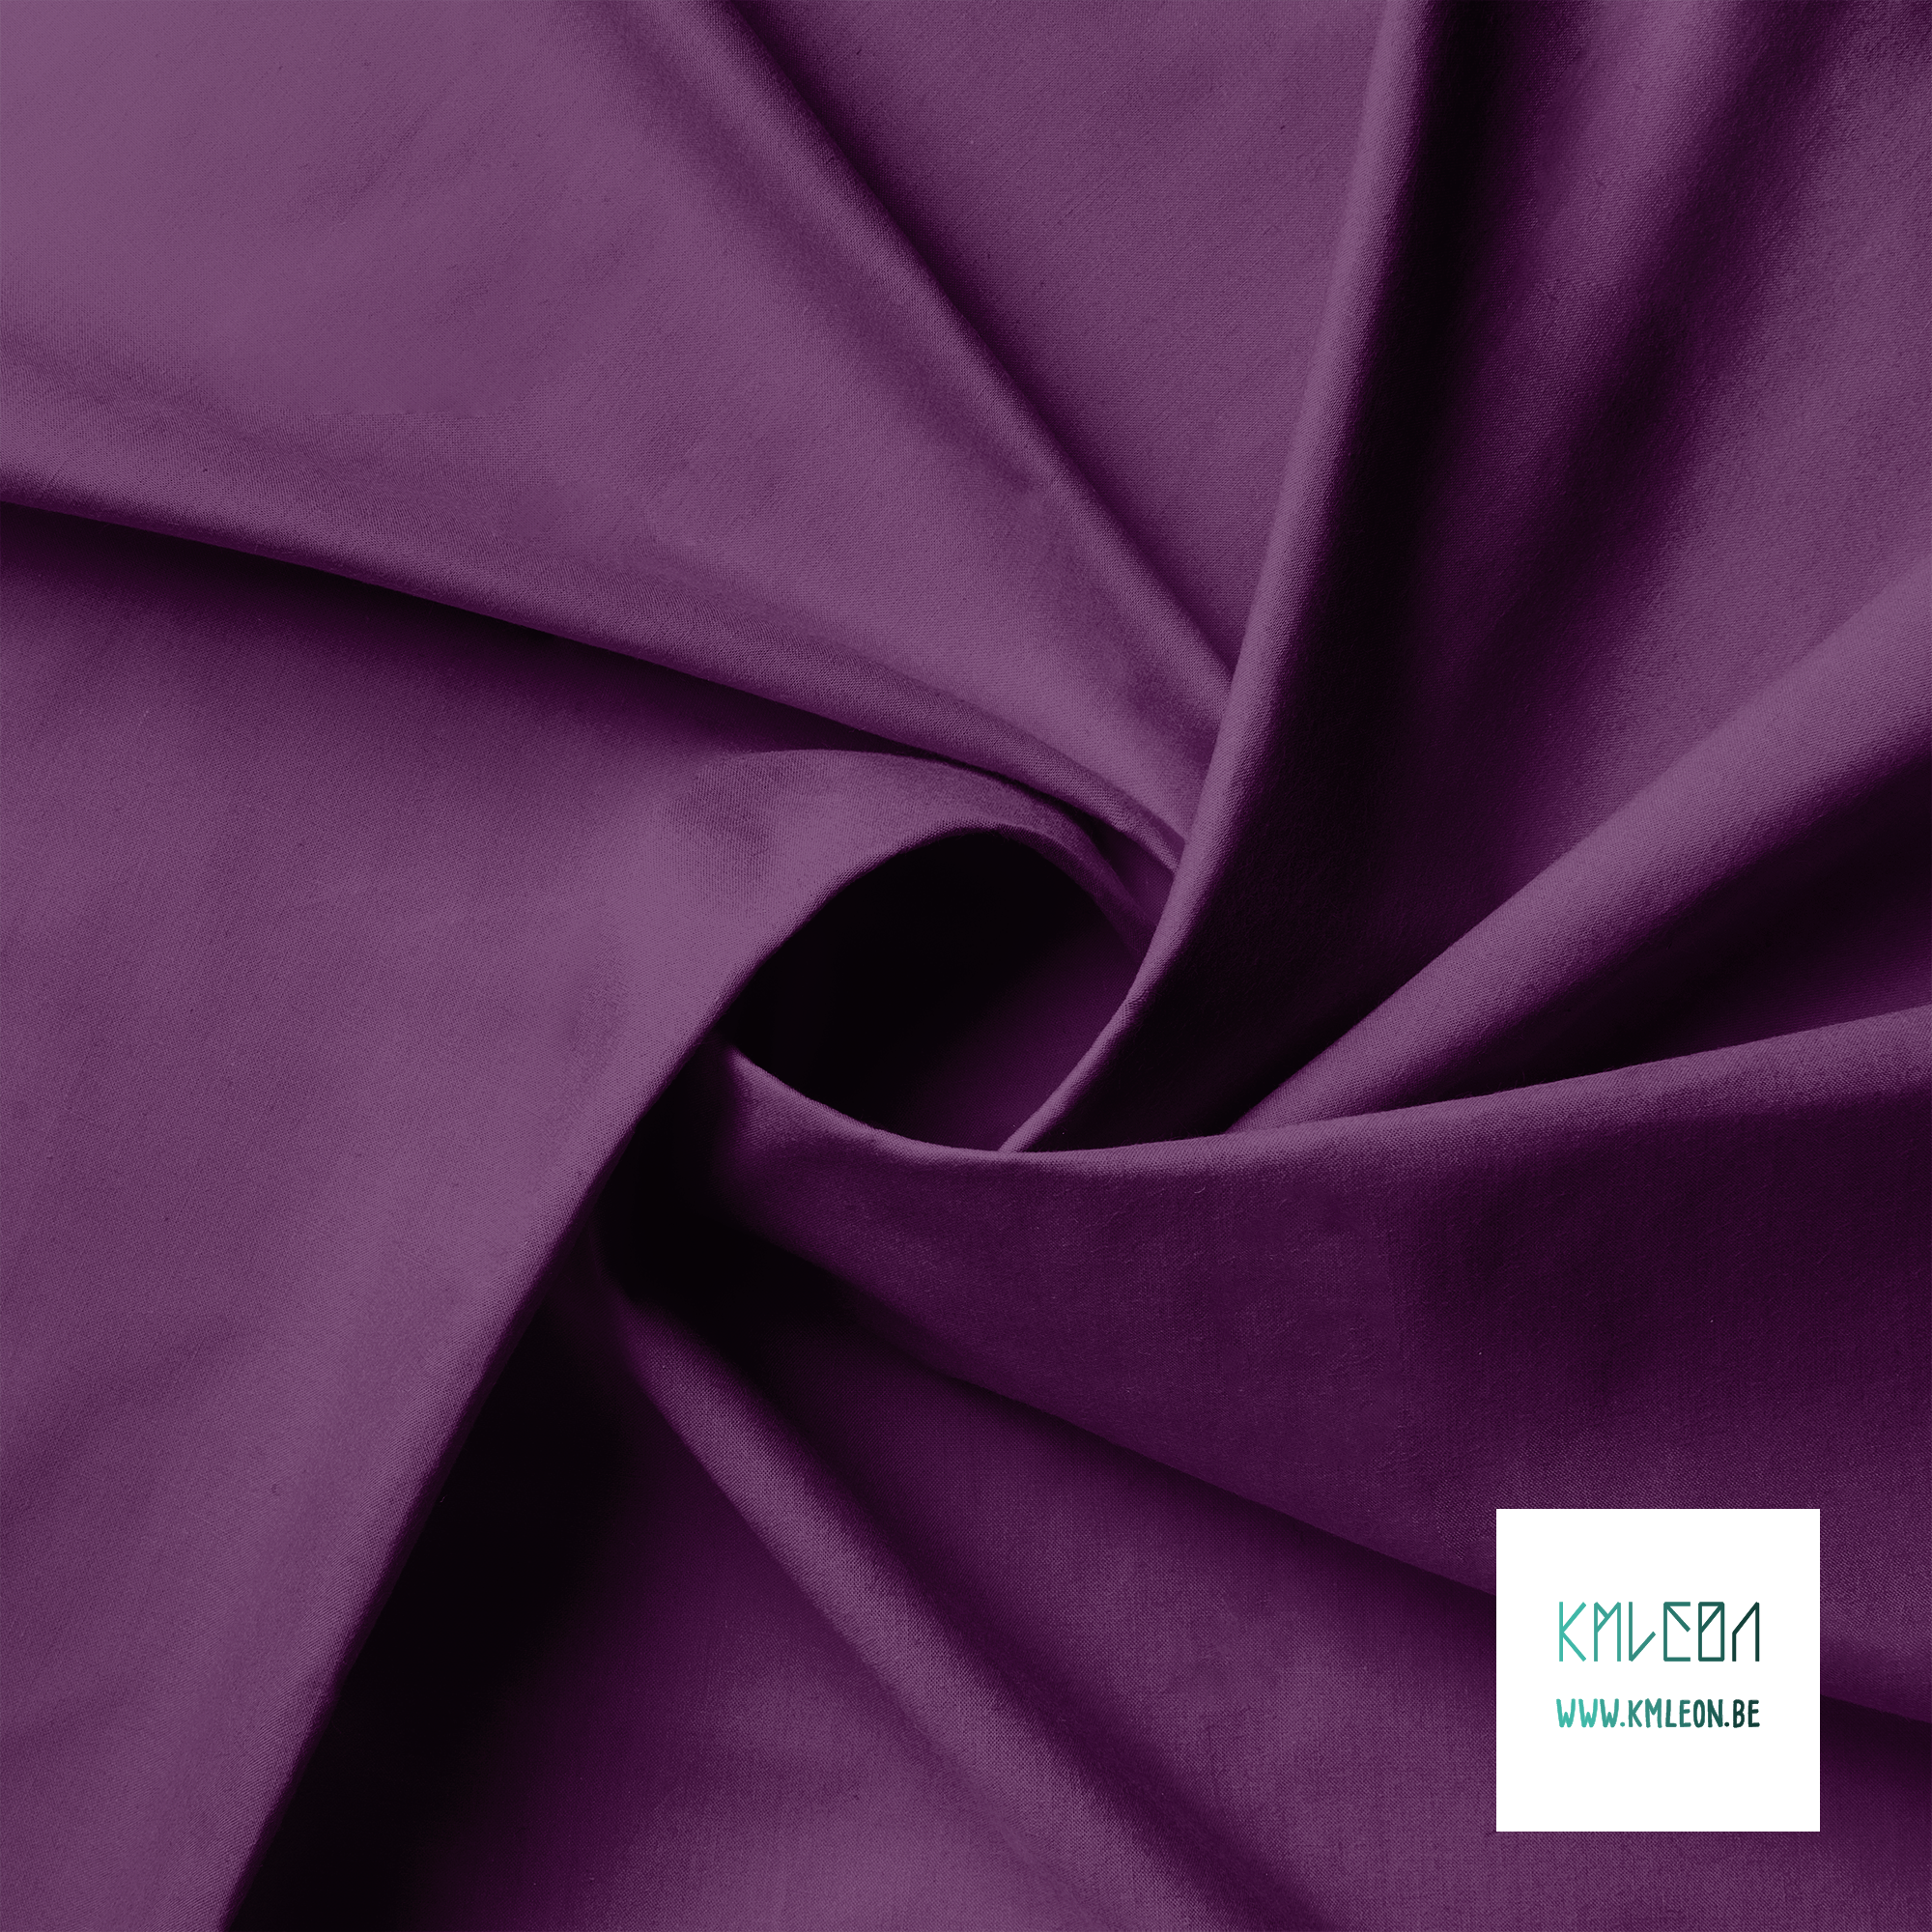 Solid byzantium purple fabric